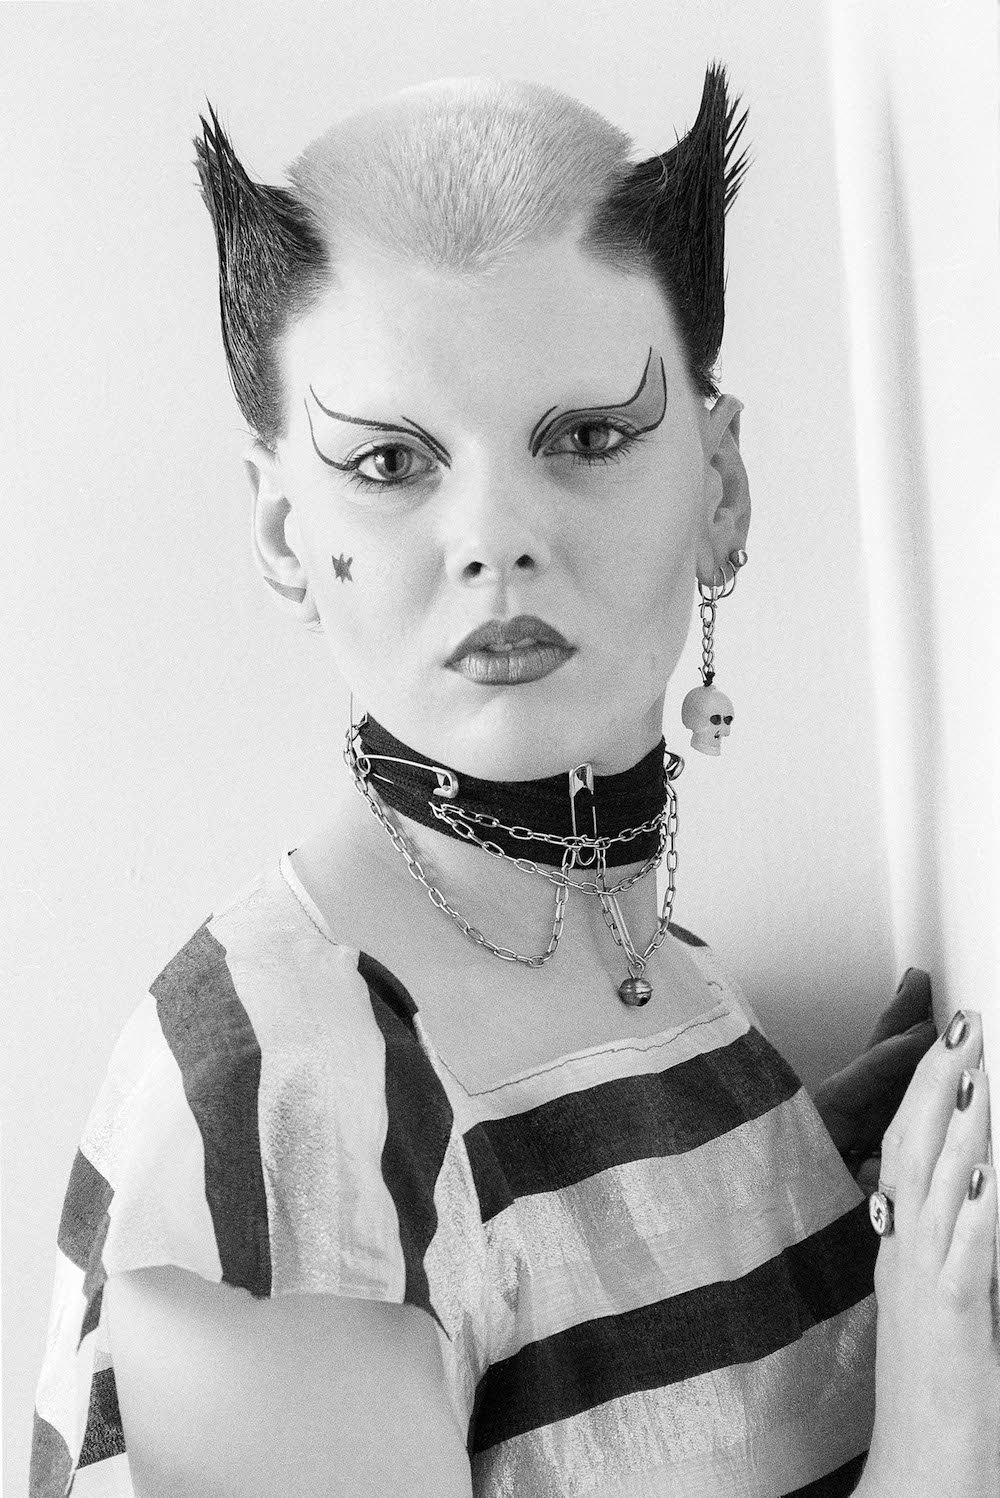 Vivienne Westwood and punk culture